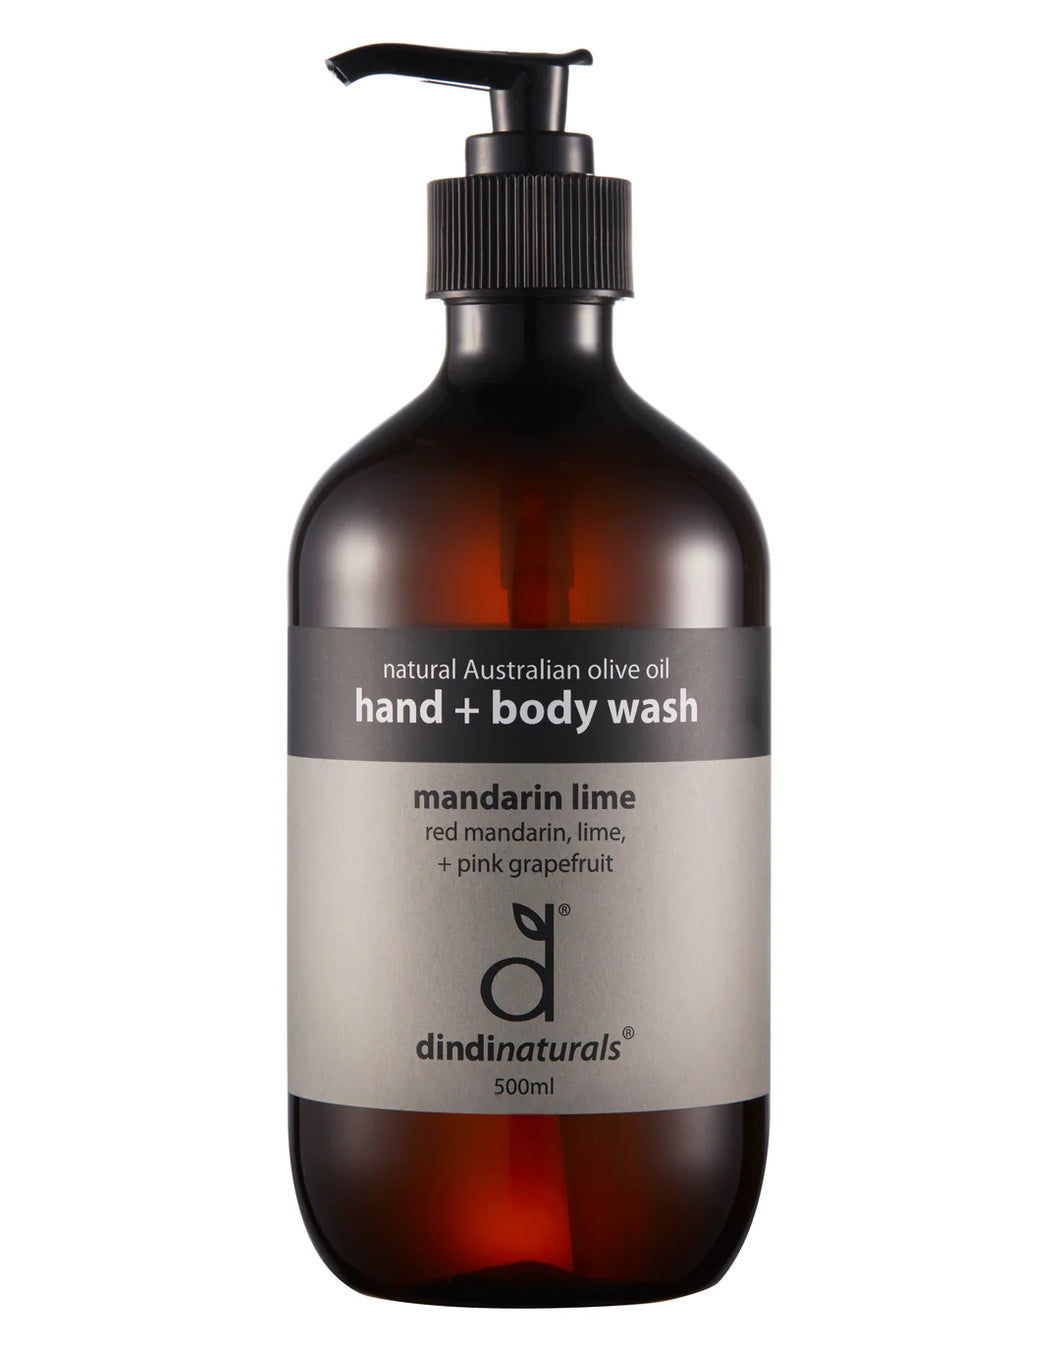 Dindi hand & body wash